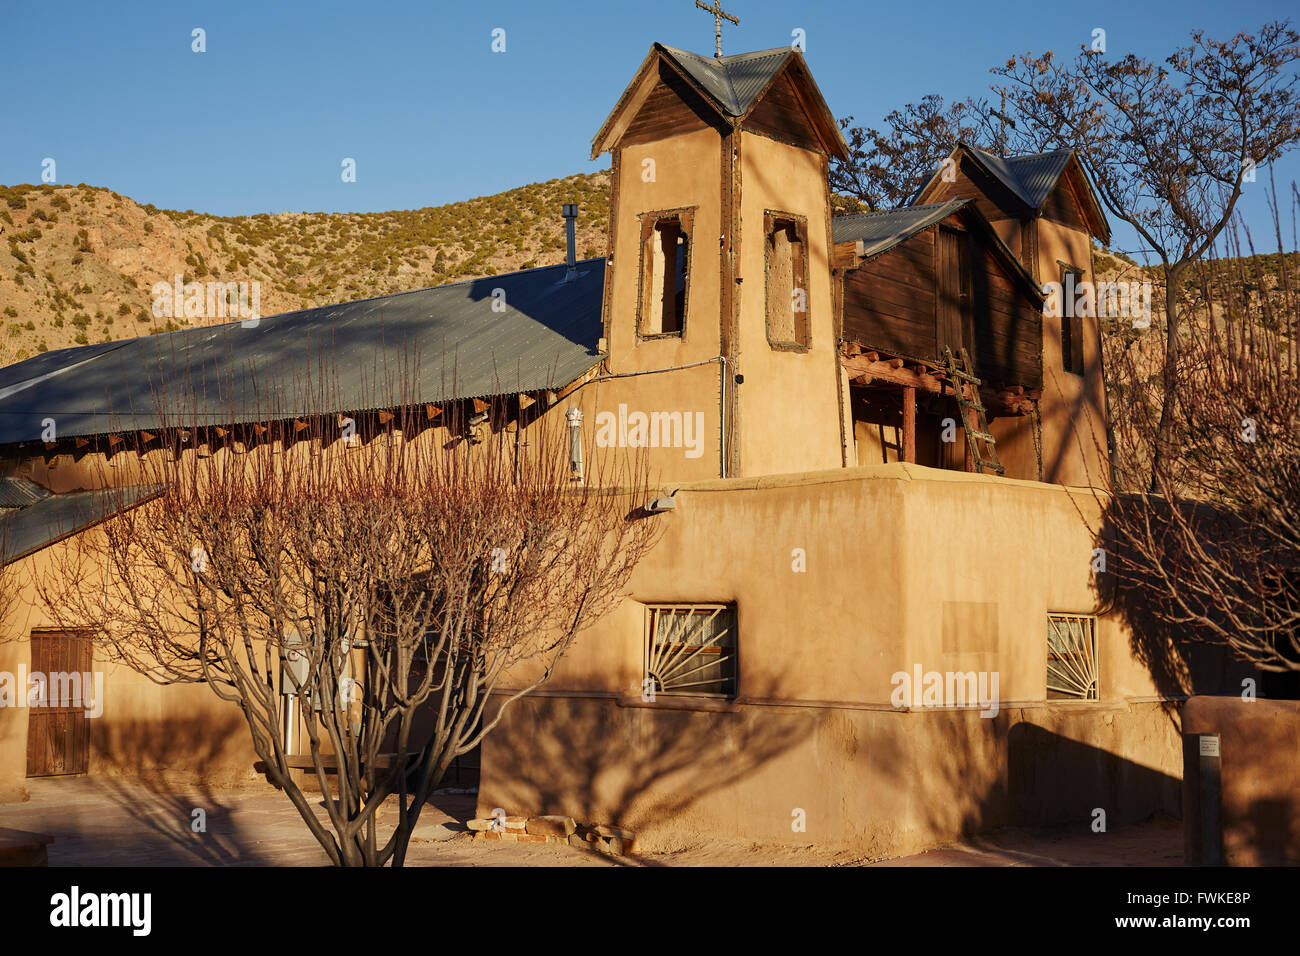 El Santuario de Chimayó, Chimayo, Nuovo Messico, STATI UNITI D'AMERICA Foto Stock